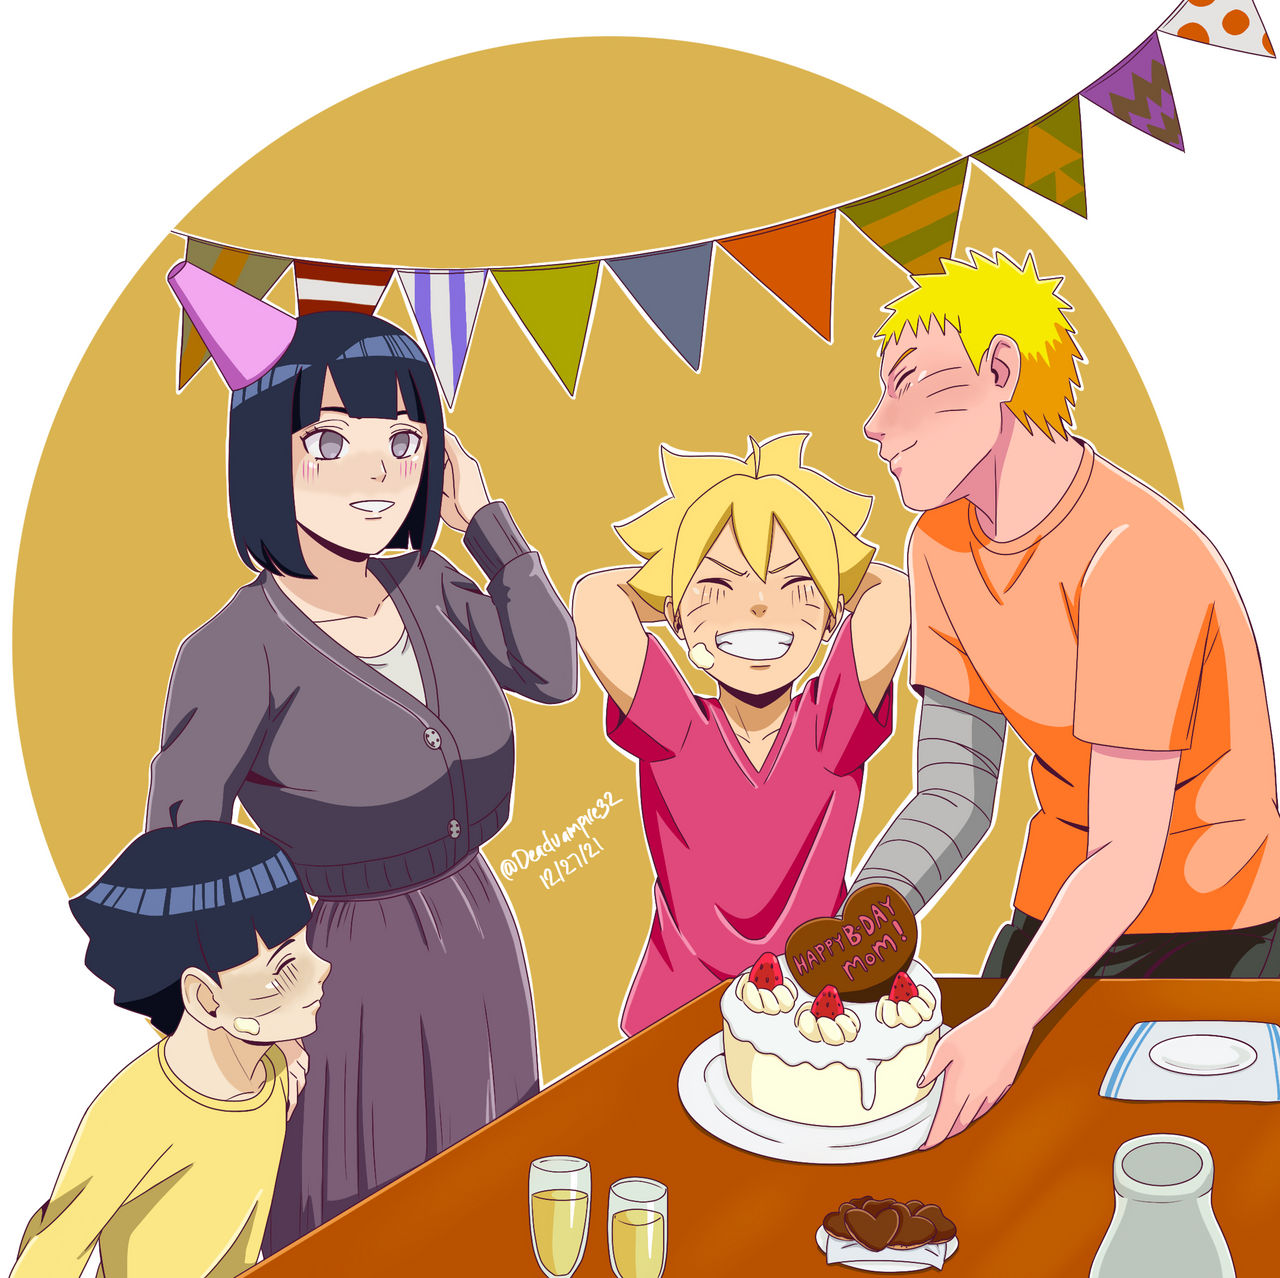 Happy Birthday to Hinata Uzumaki ❤️ Naruto's loving wife and the caring  mother to Boruto, Himawari and Kawaki 💜 (27/12) : r/Boruto